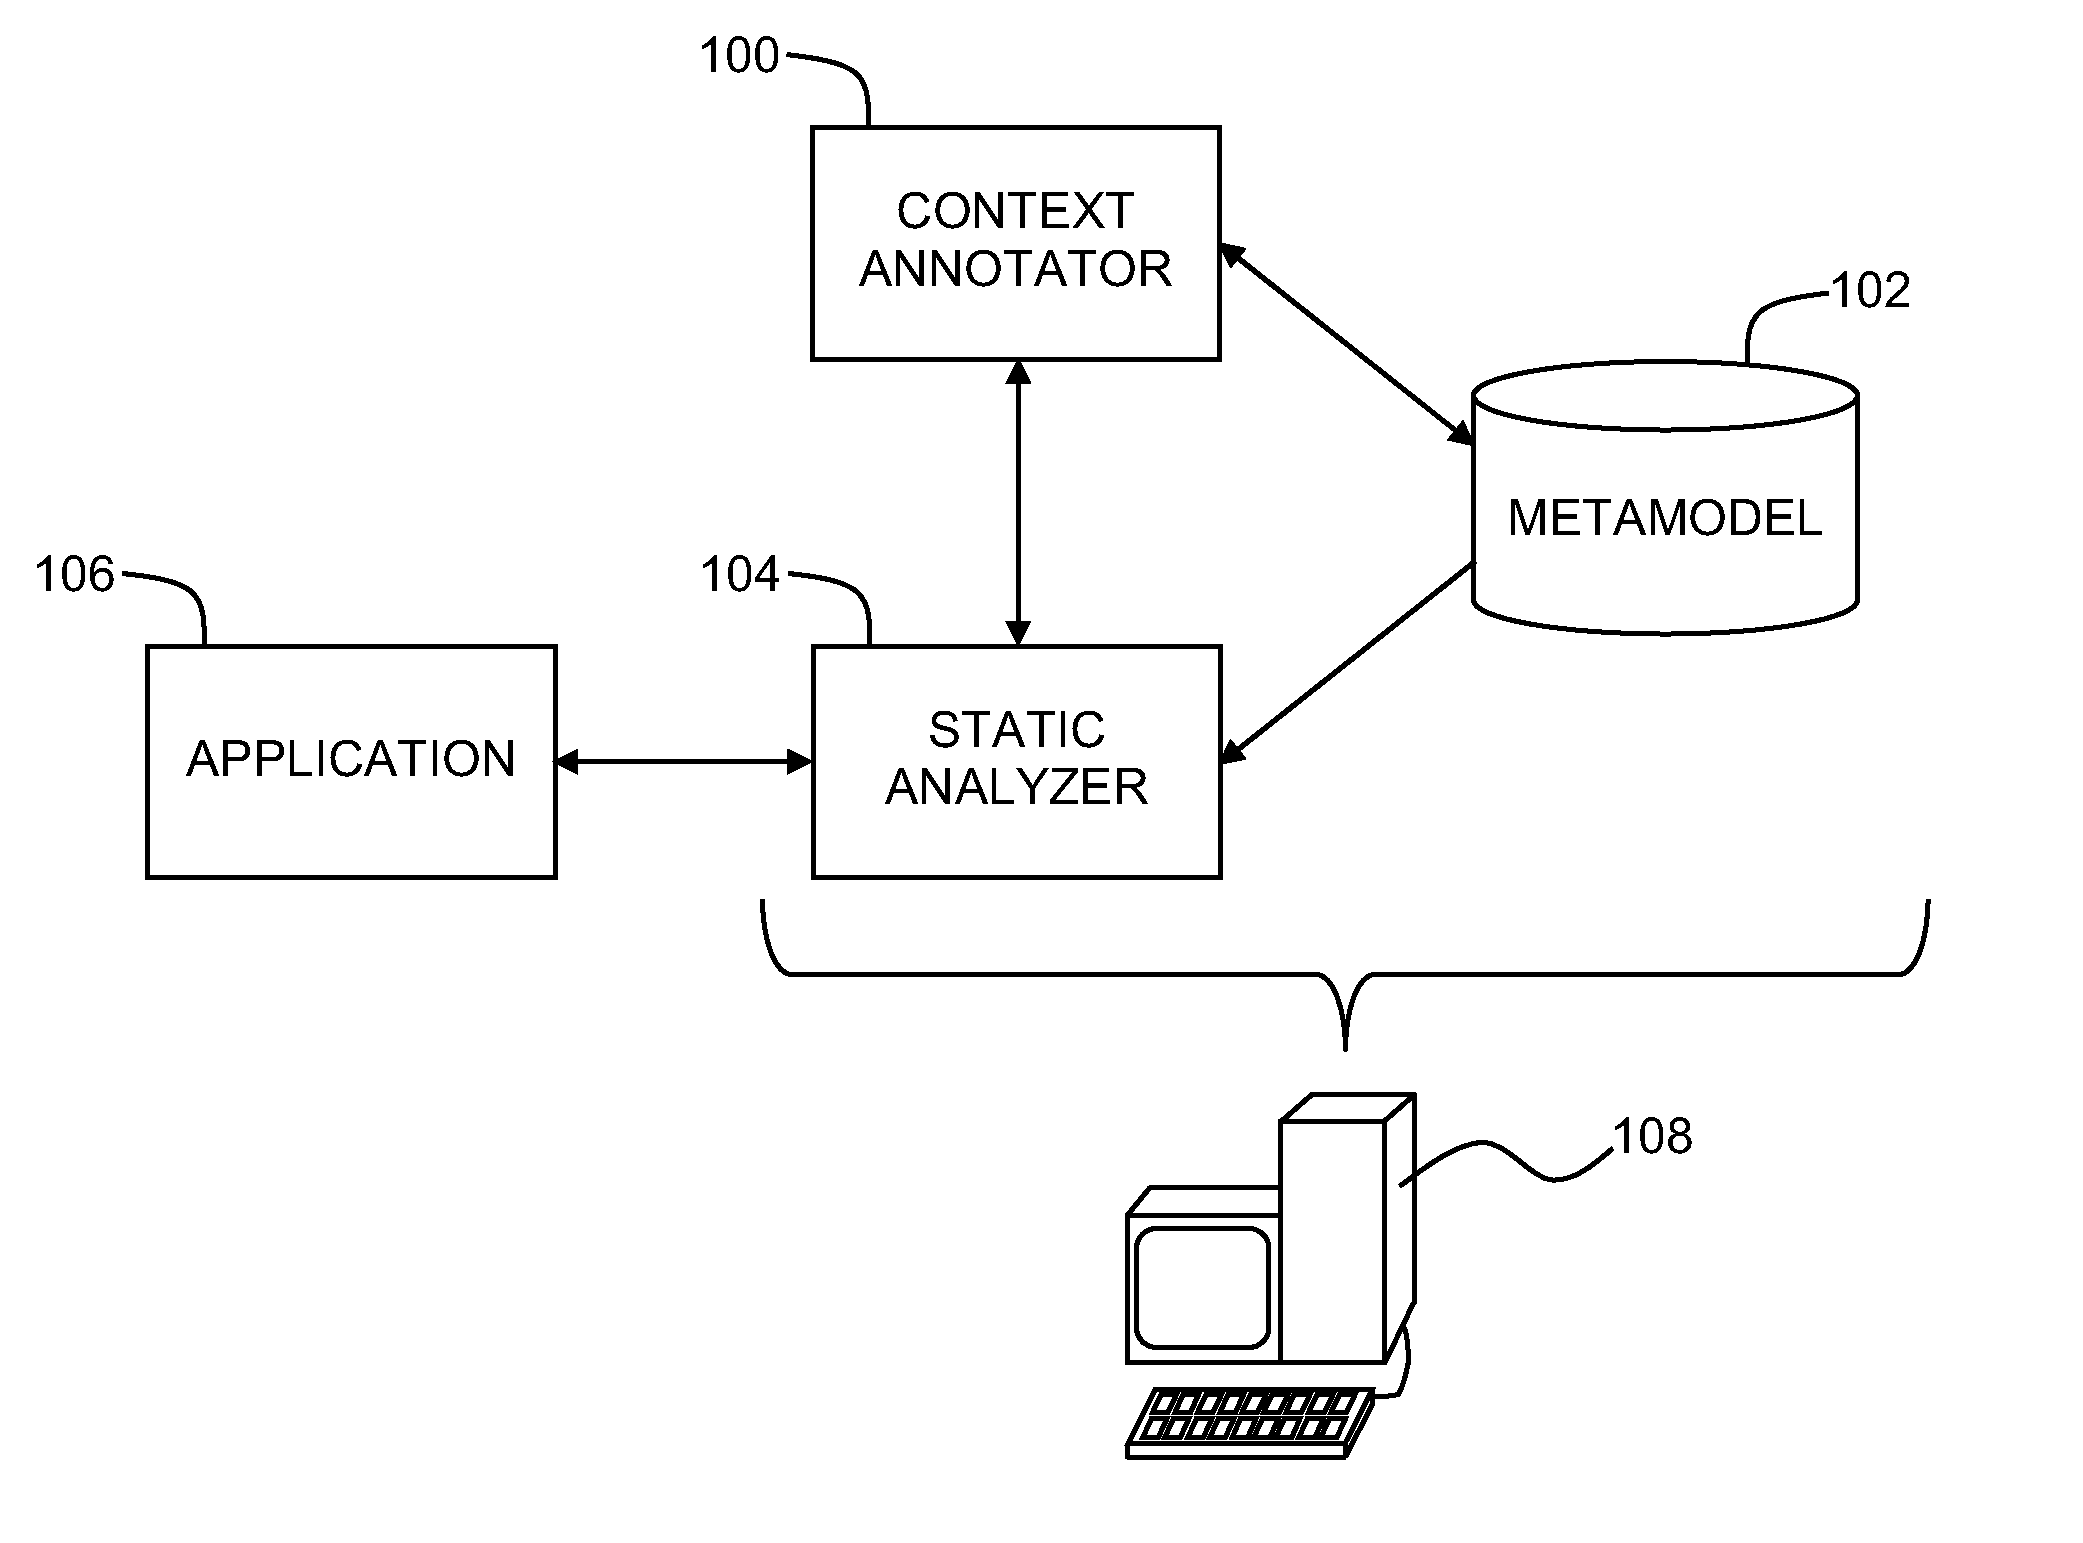 Metamodeling Contextual Navigation of Computer Software Applications